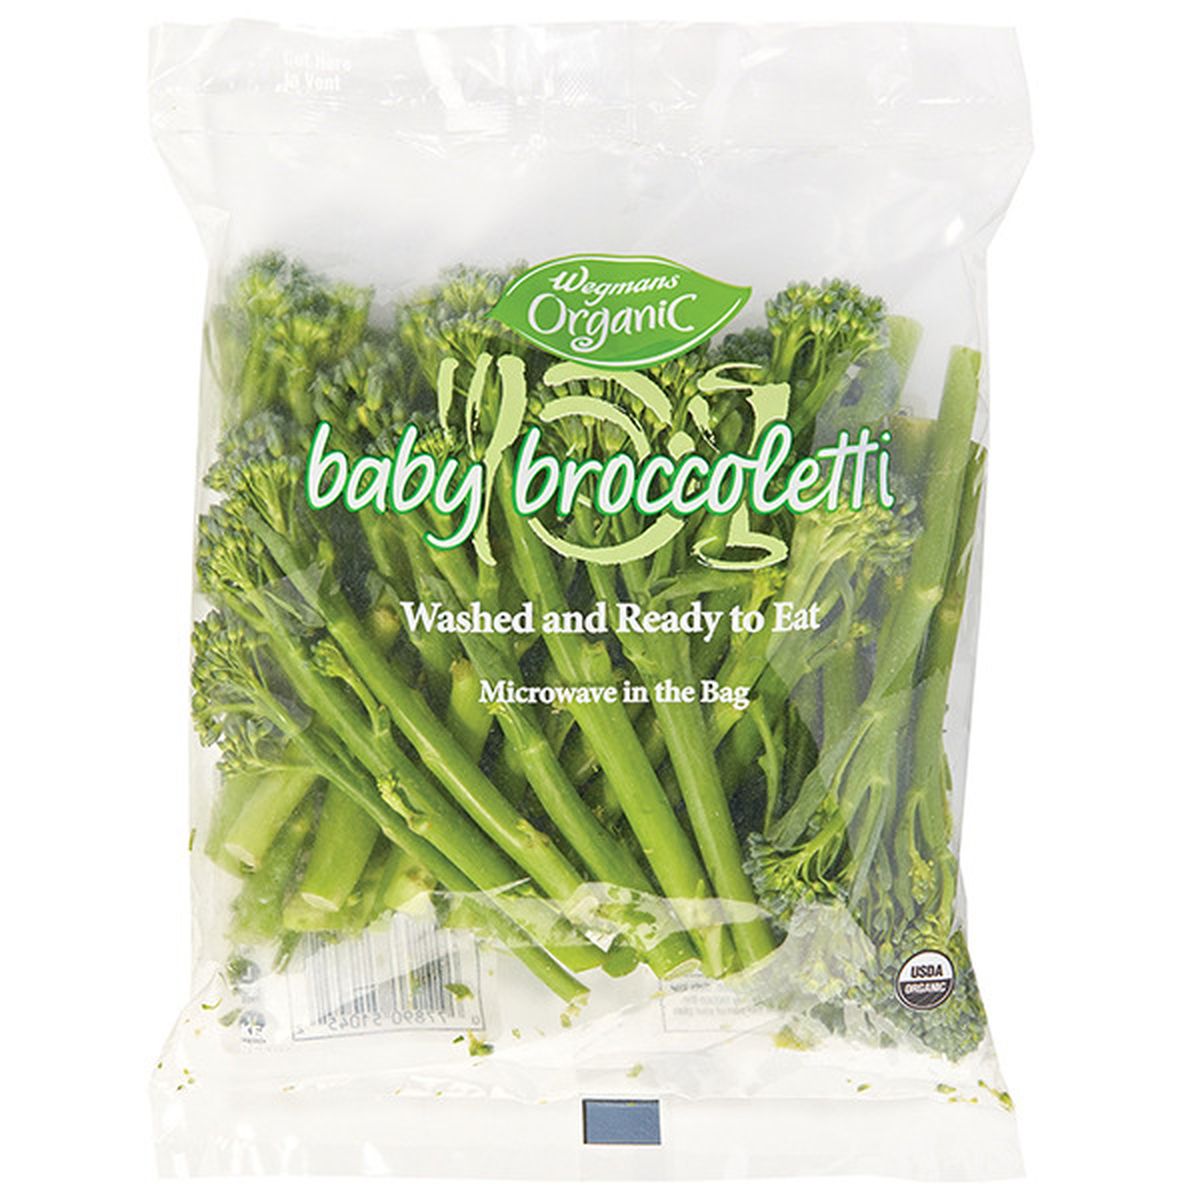 Calories in Organic Baby Broccoletti